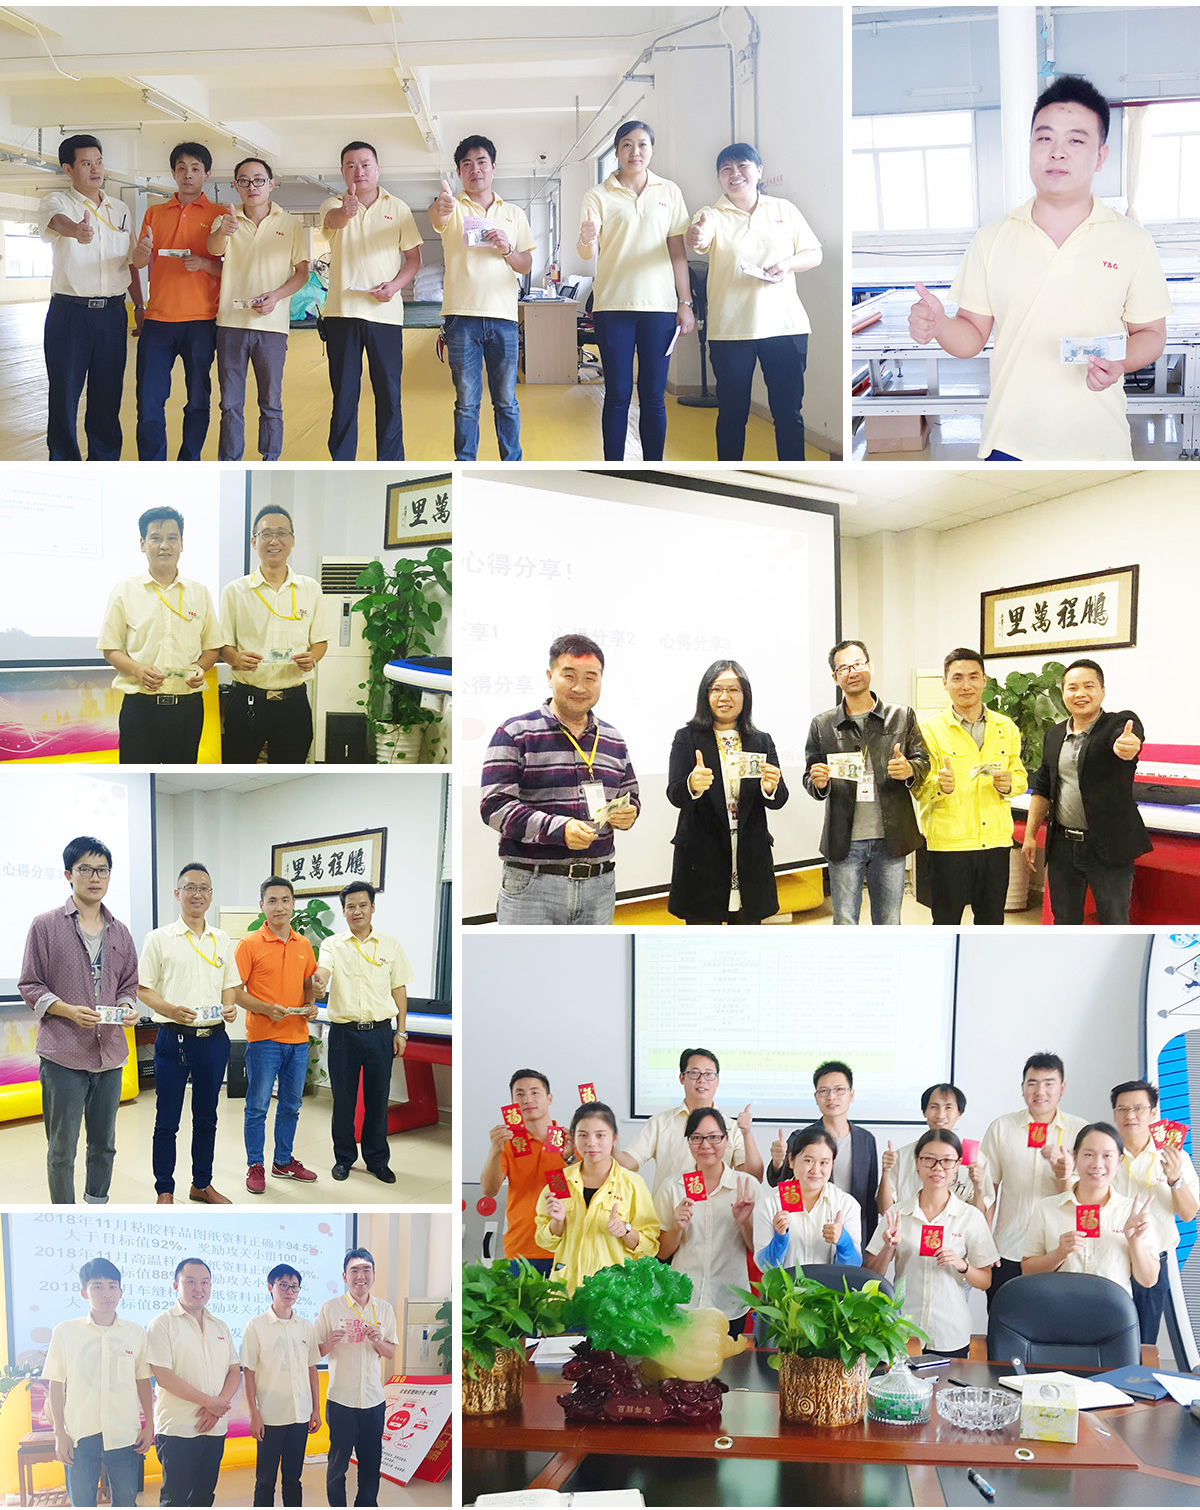 Y&G Team(Pango Inflatable Co., Ltd)